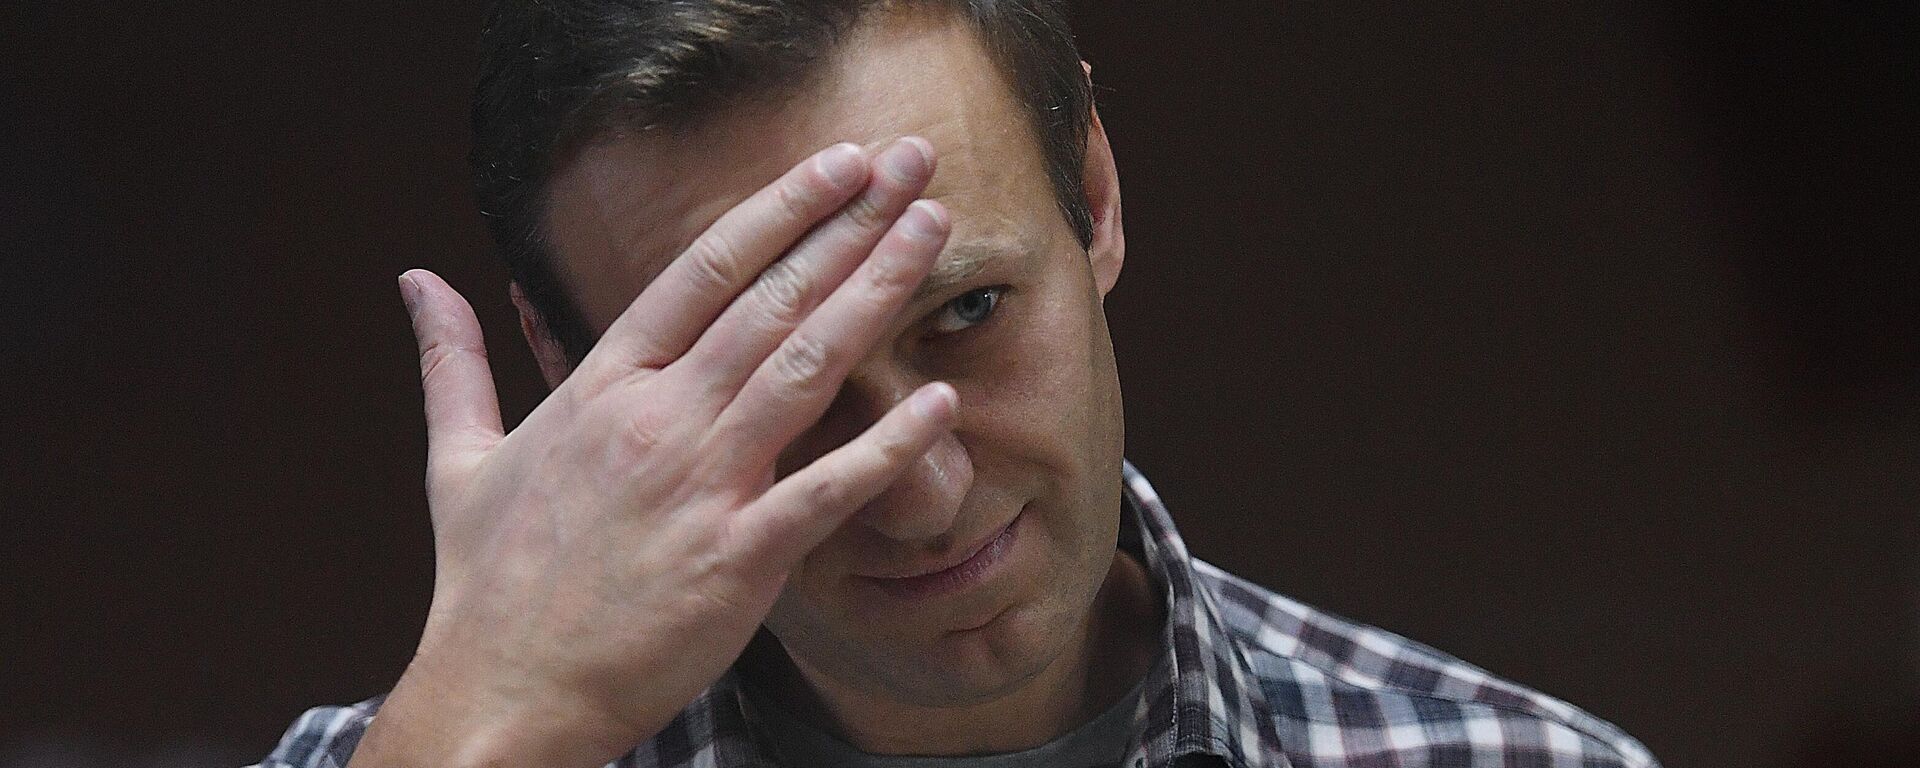 Alexéi Navalni, bloguero opositor ruso - Sputnik Mundo, 1920, 26.02.2021